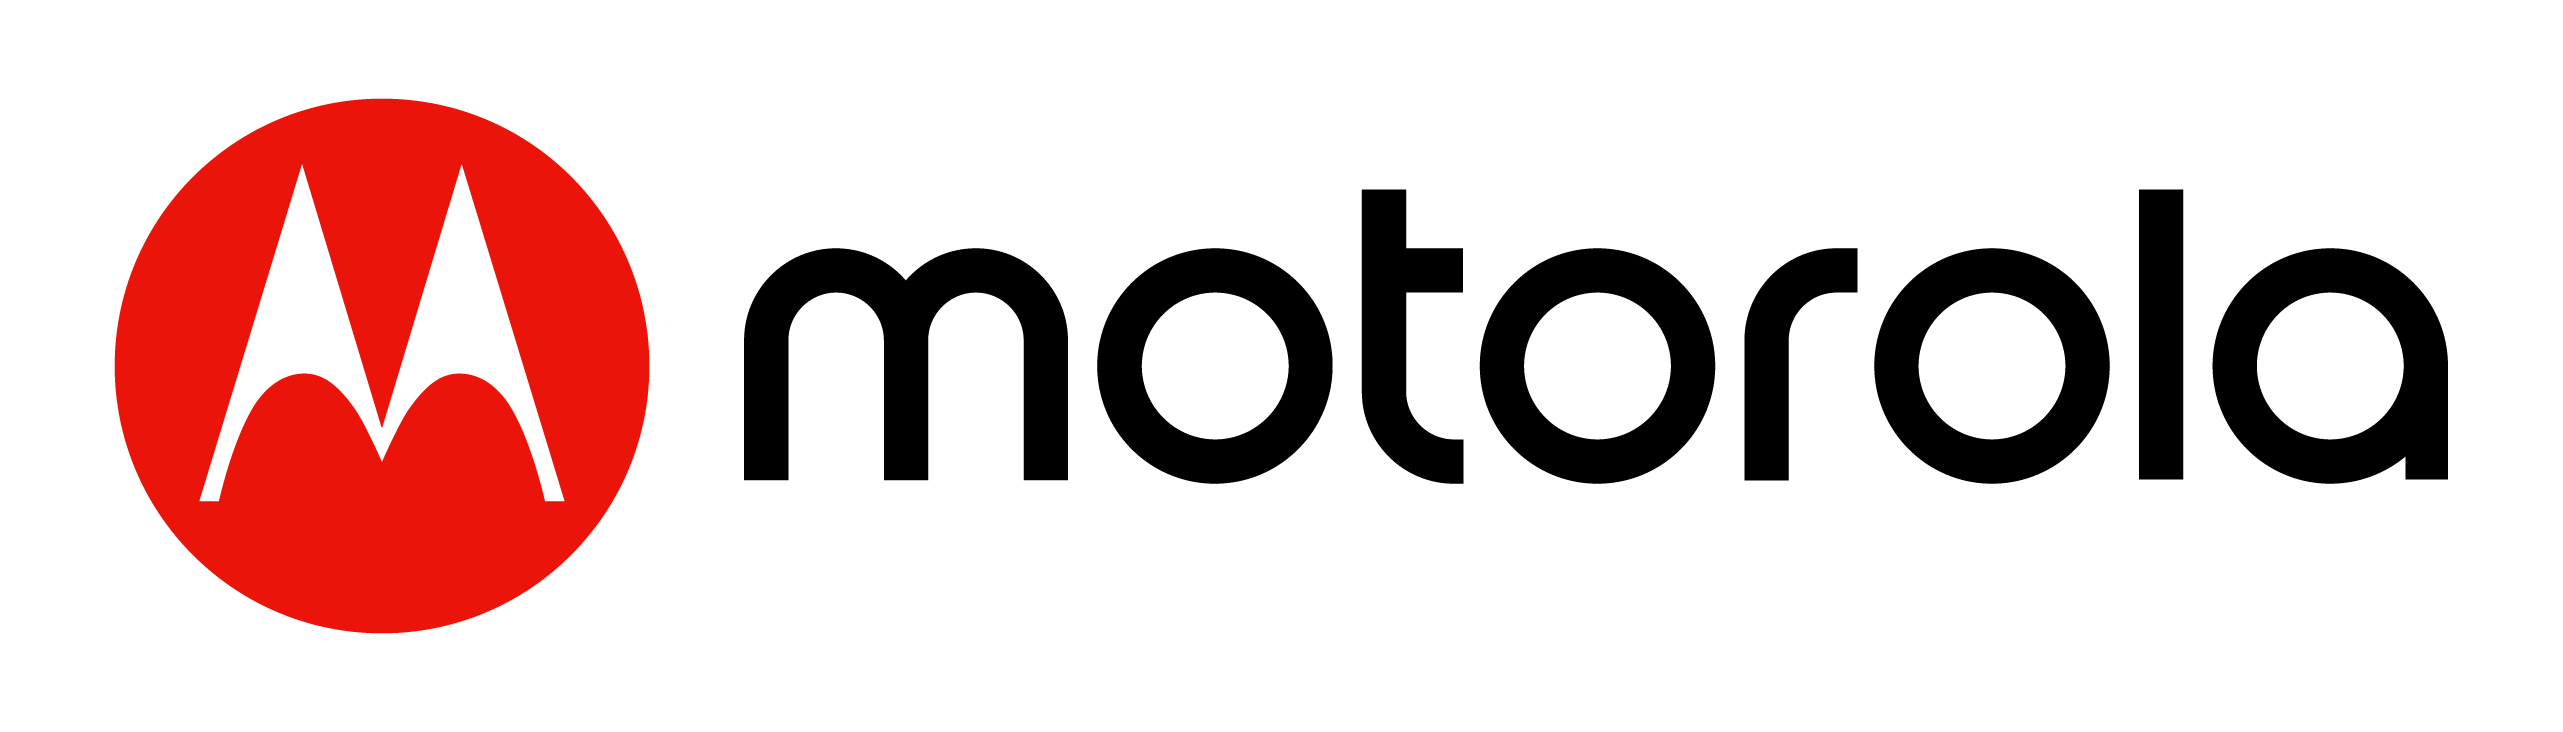 Motorola Logo 2018